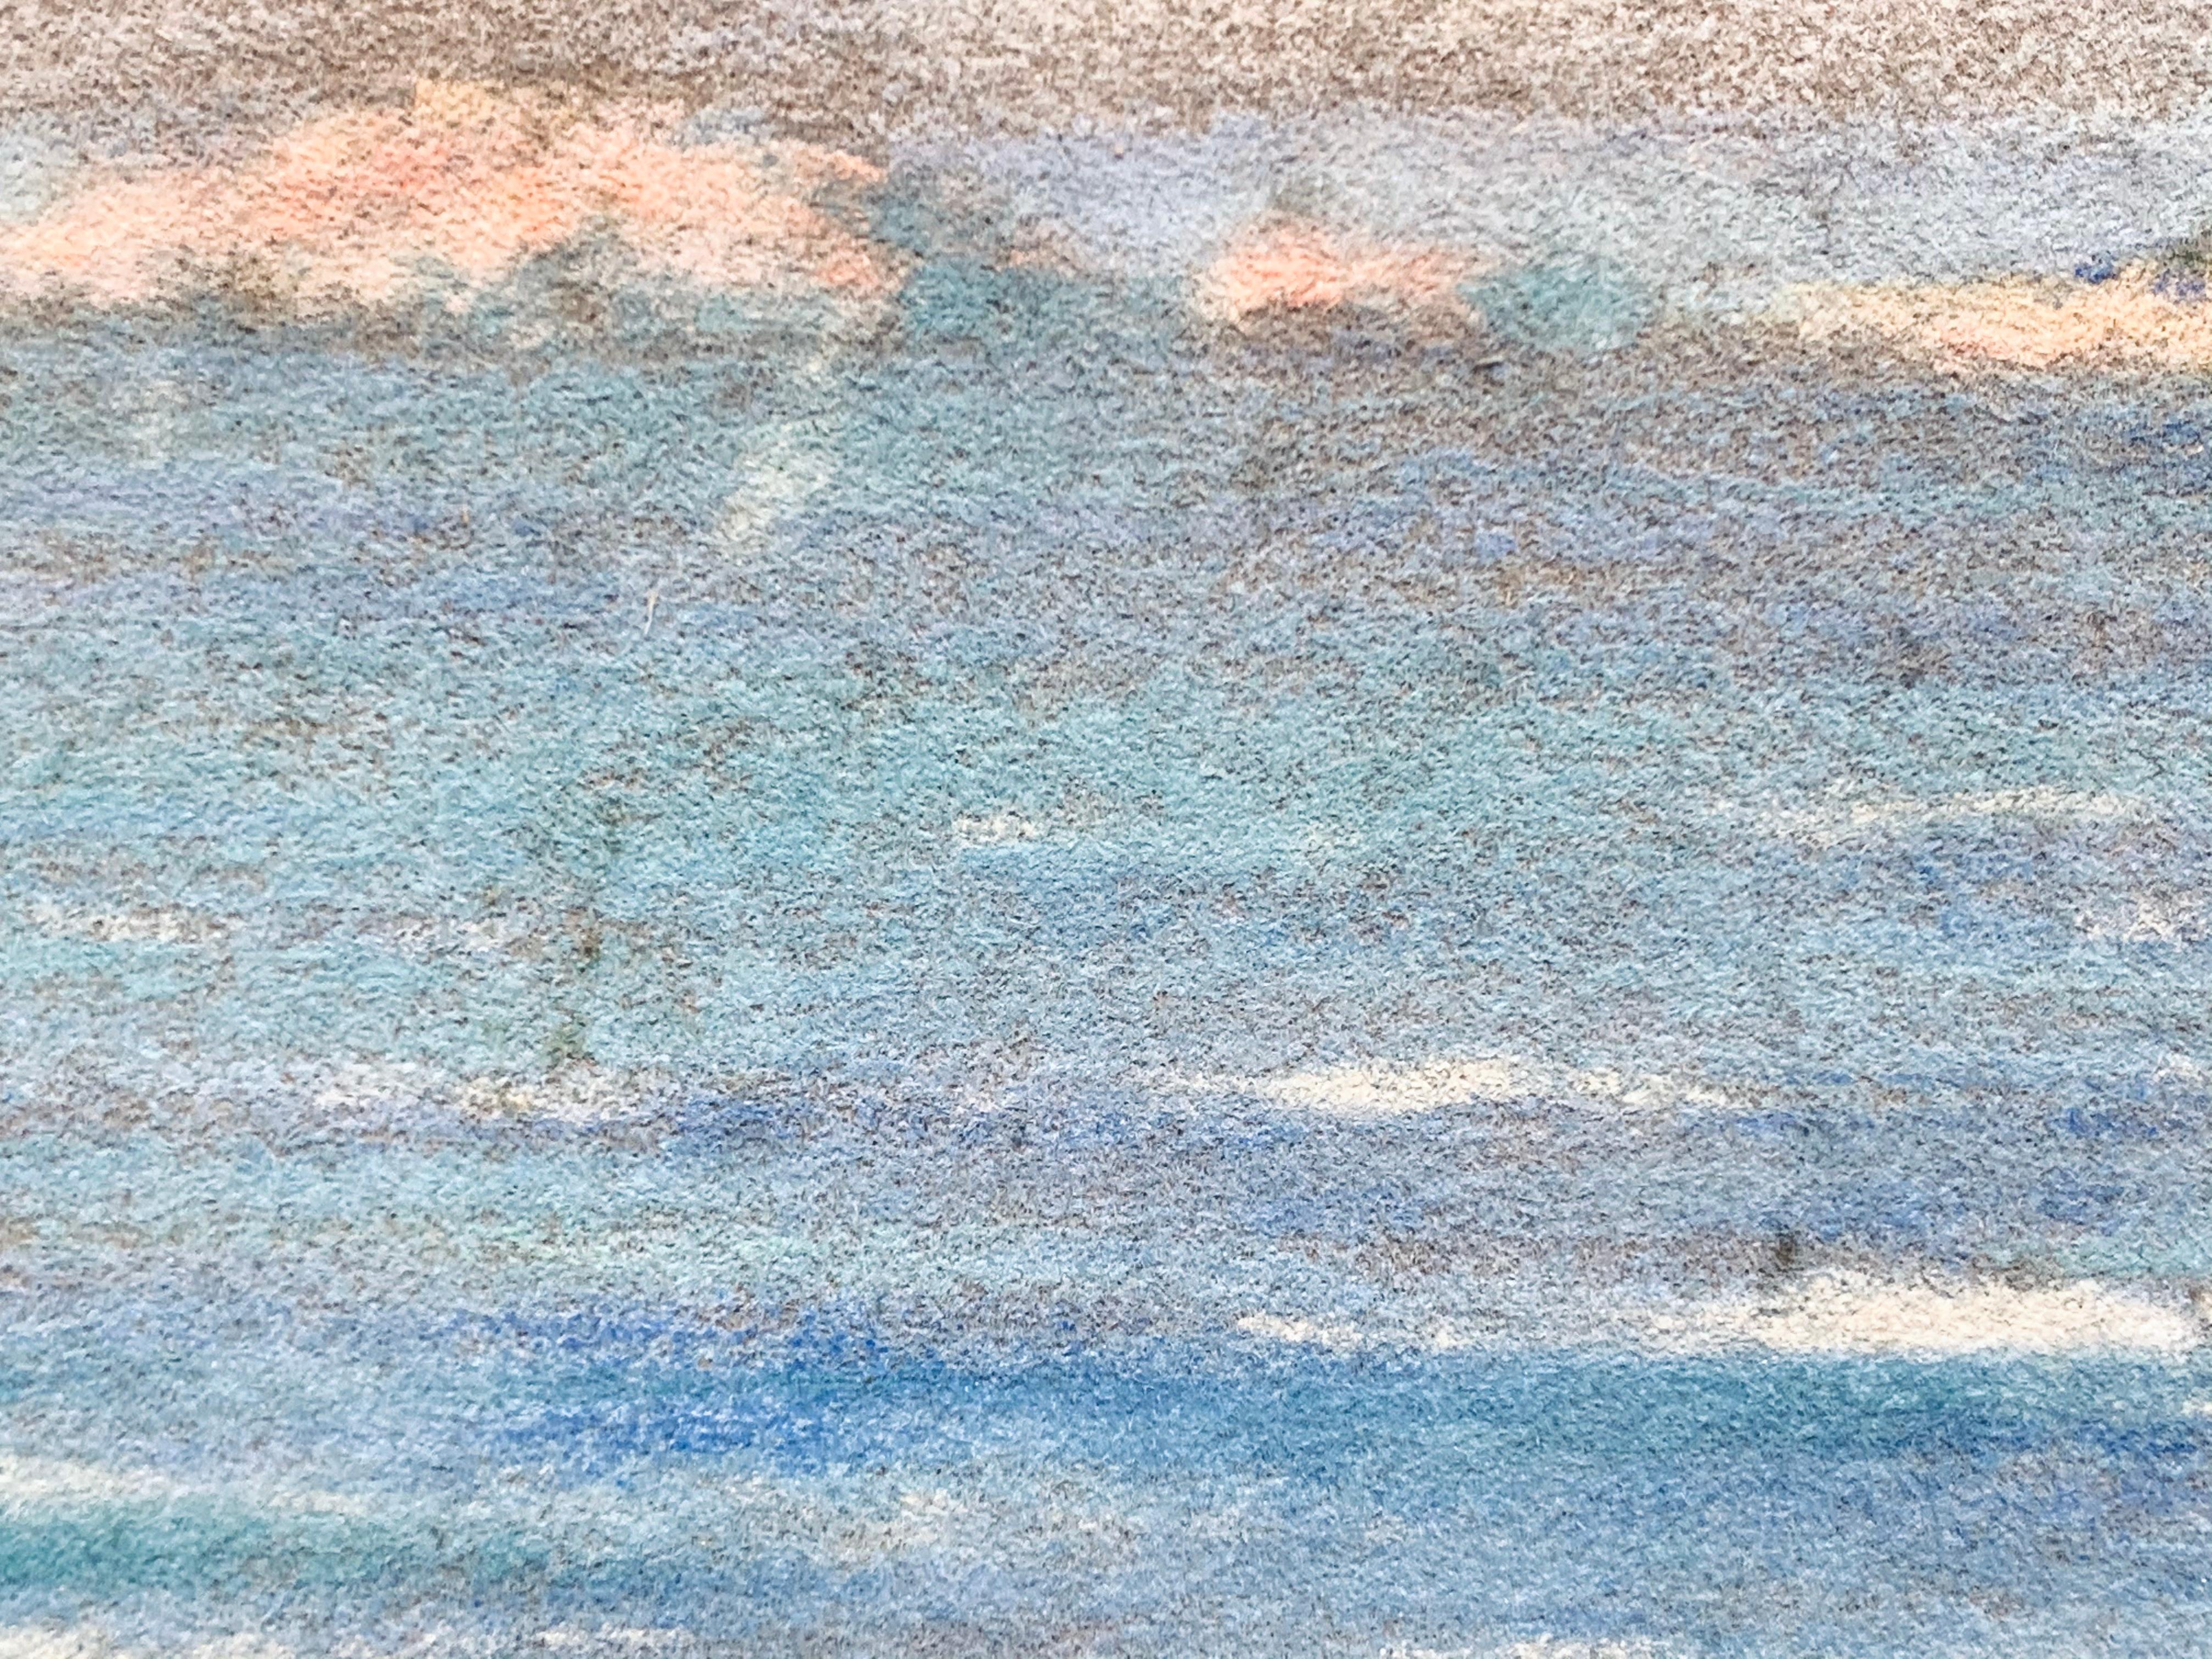 Antique French impressionist Marine pastel painting Cote d'azur  - Impressionist Painting by M. Belliard